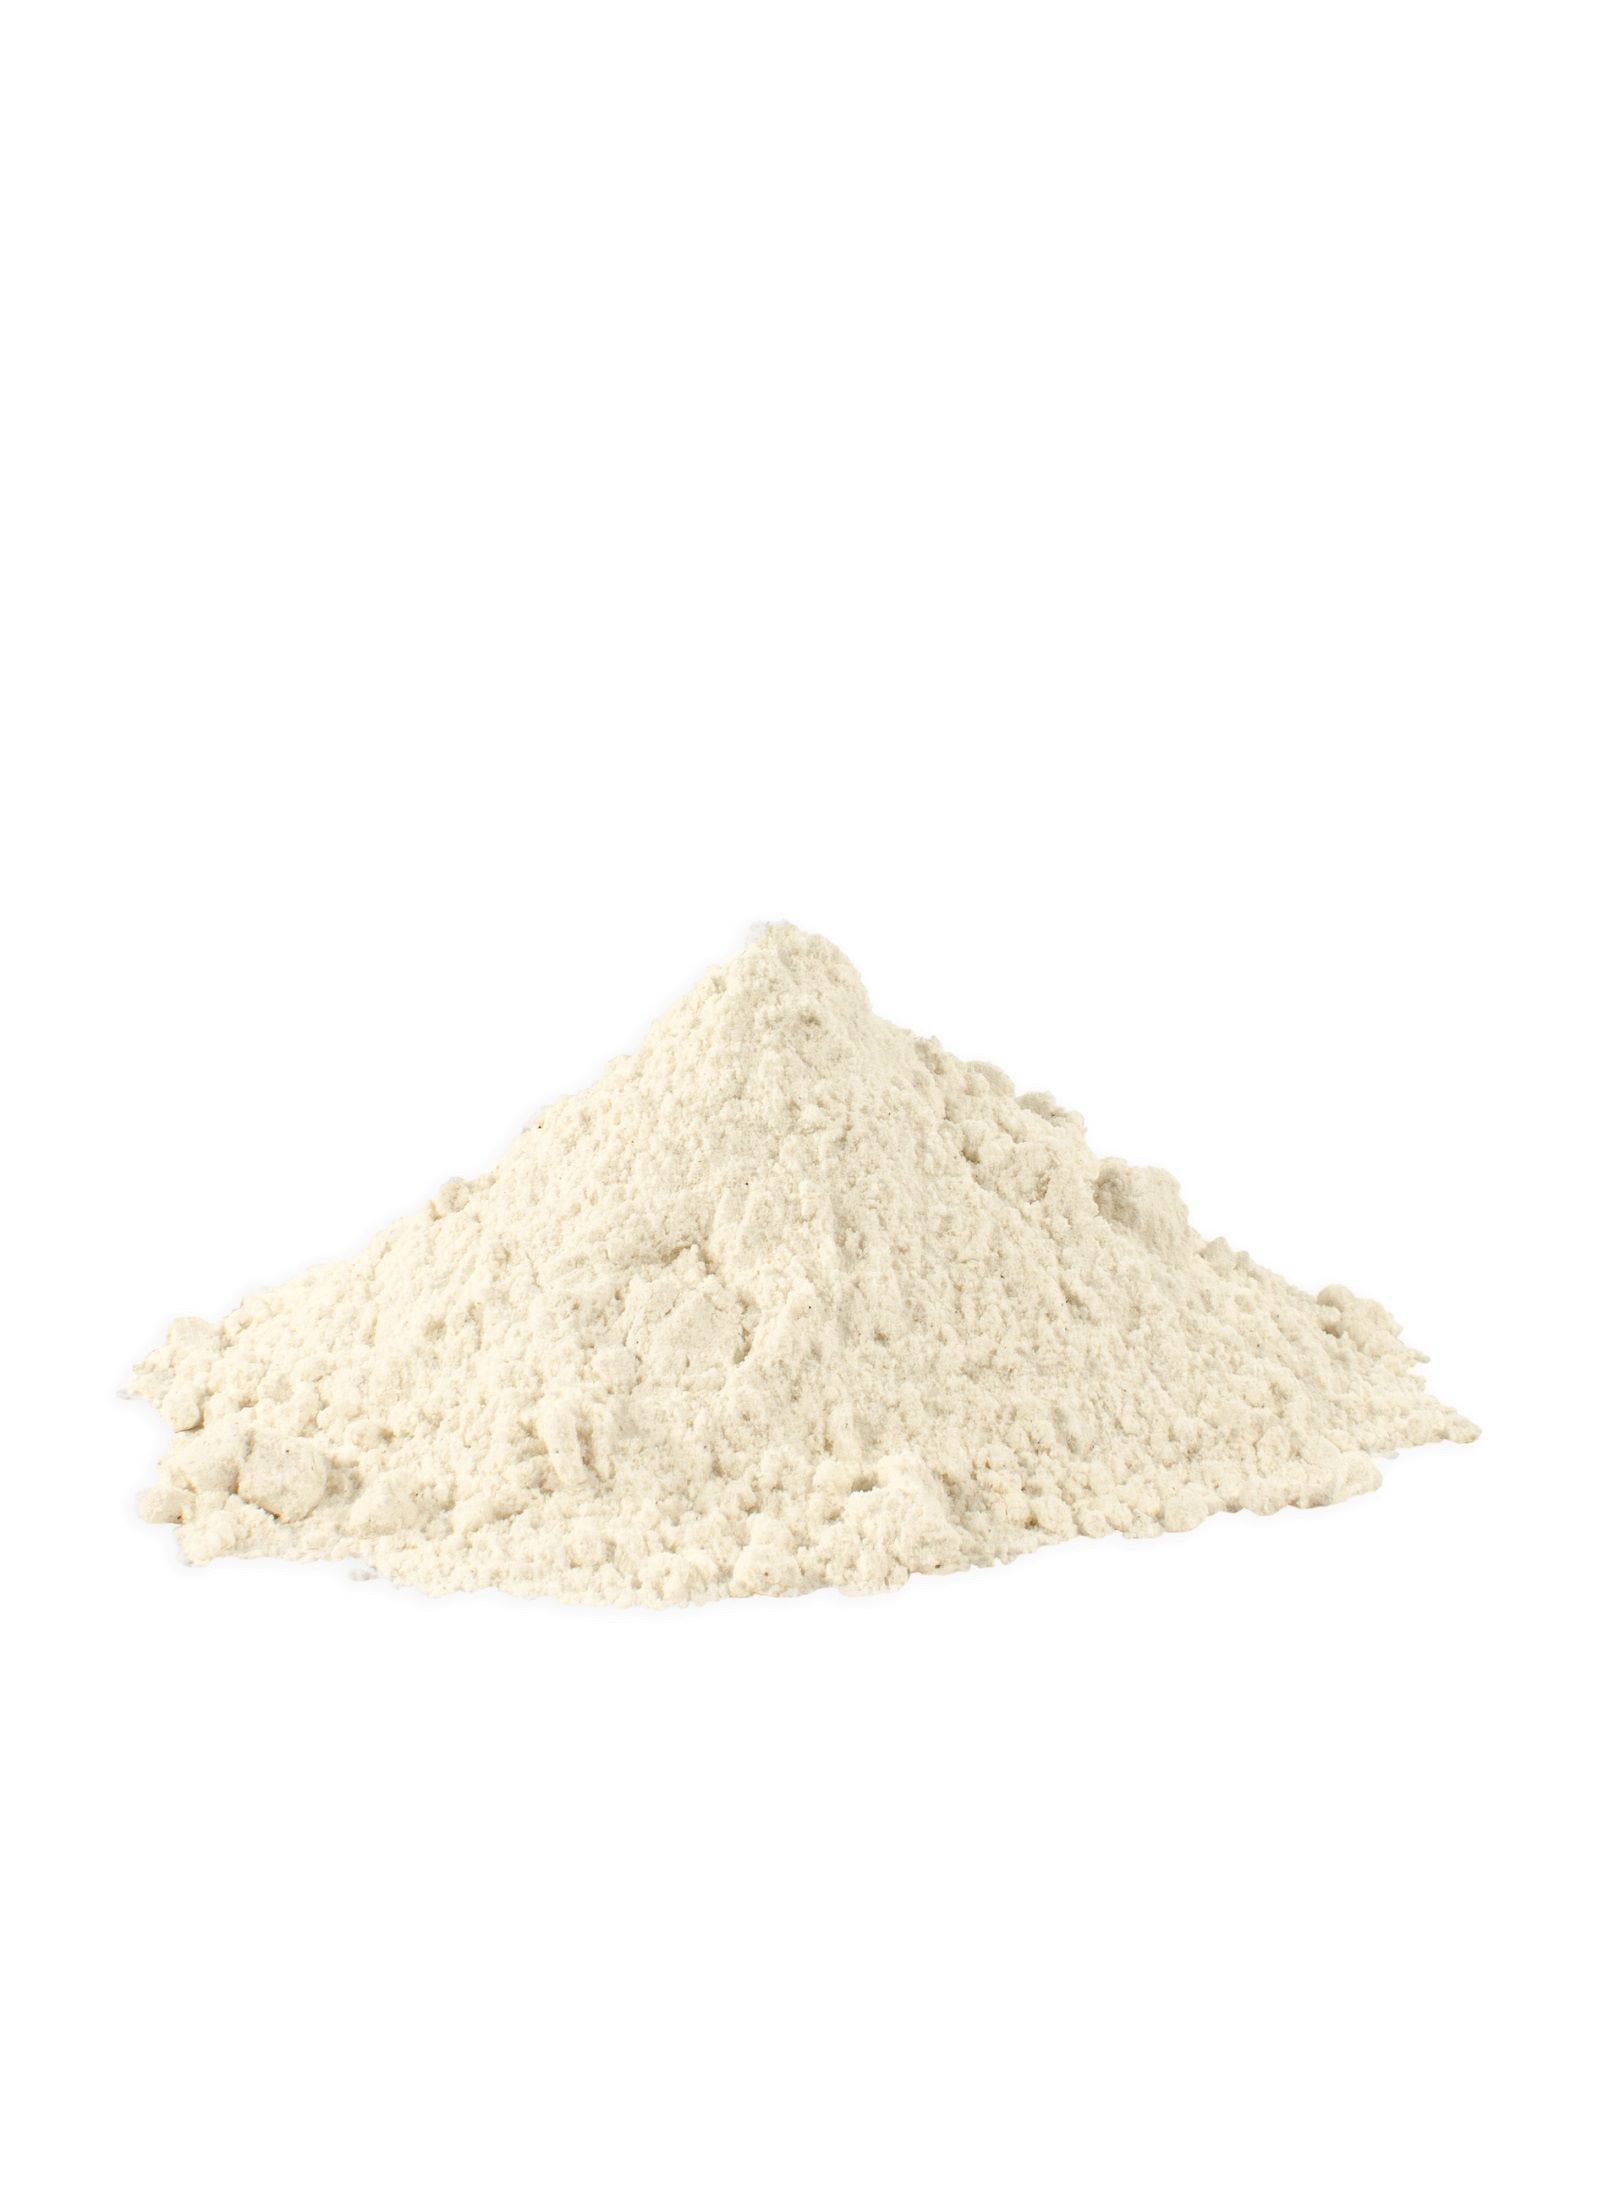 Bob's Red Mill Pancake Protein Powder, 15g Protein, 14 oz - image 4 of 4